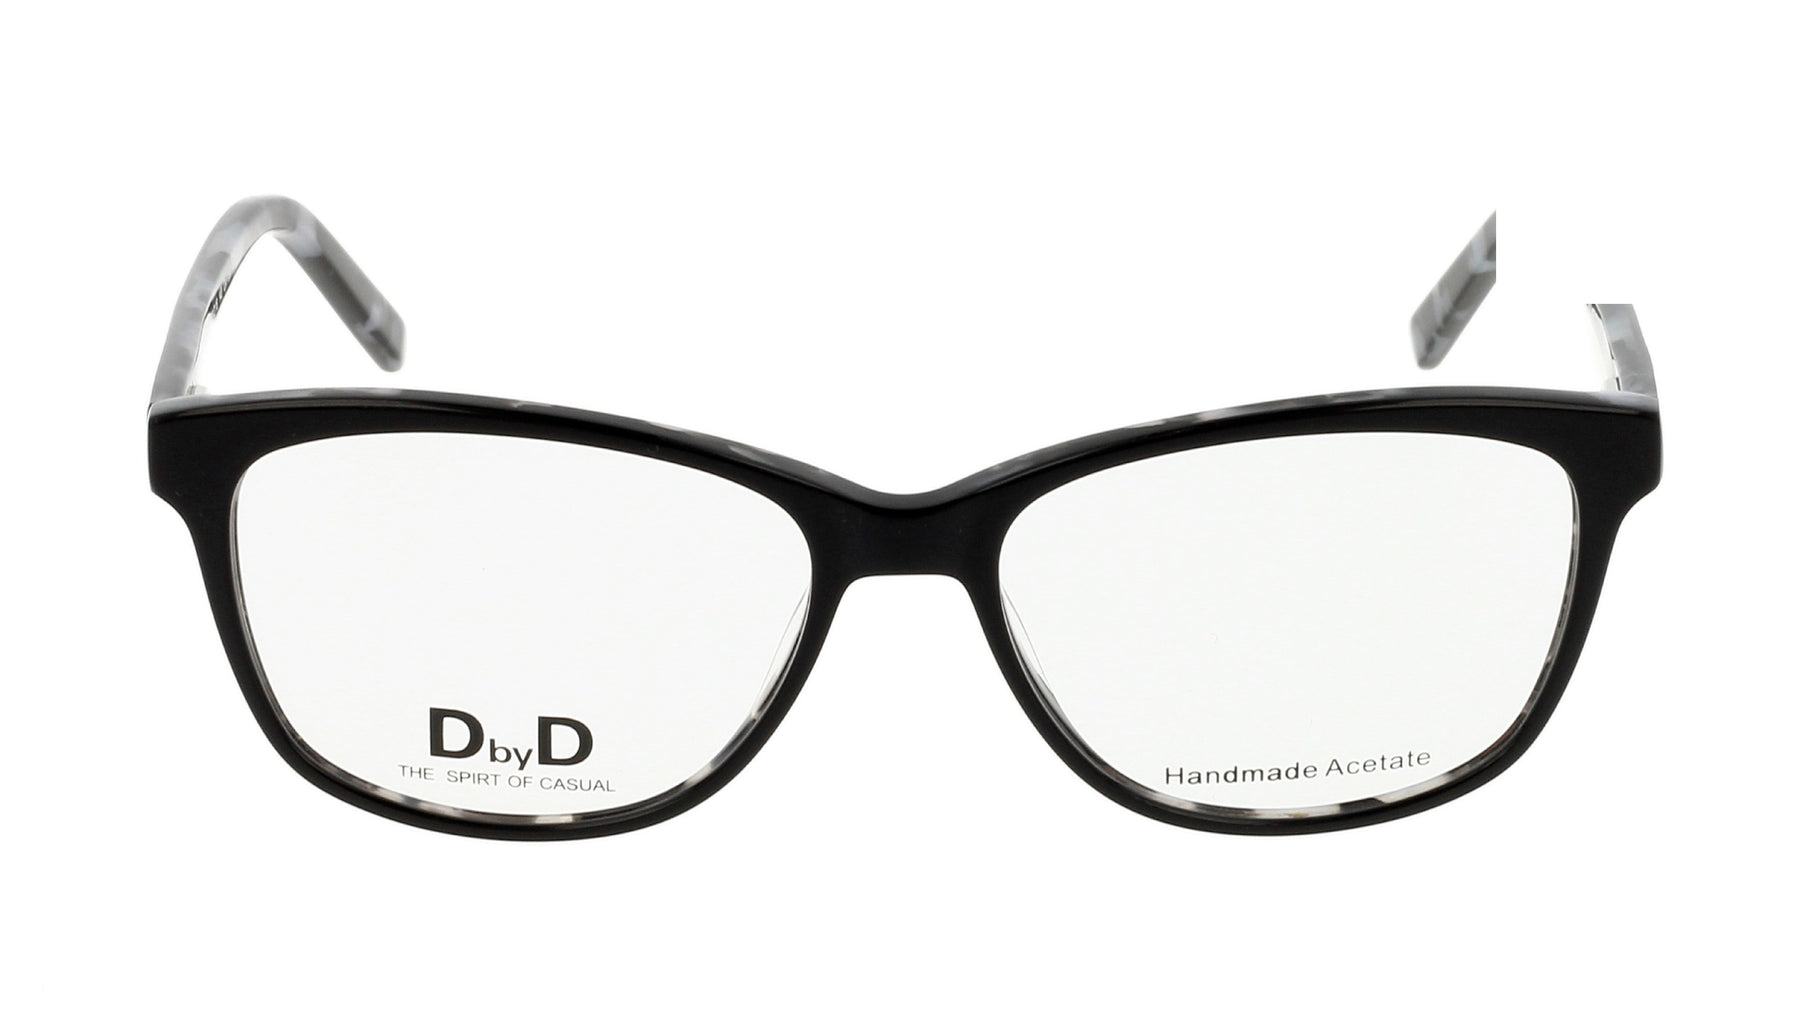 Vista-1 - Gafas oftálmicas DbyD HF01 Mujer Color Negro